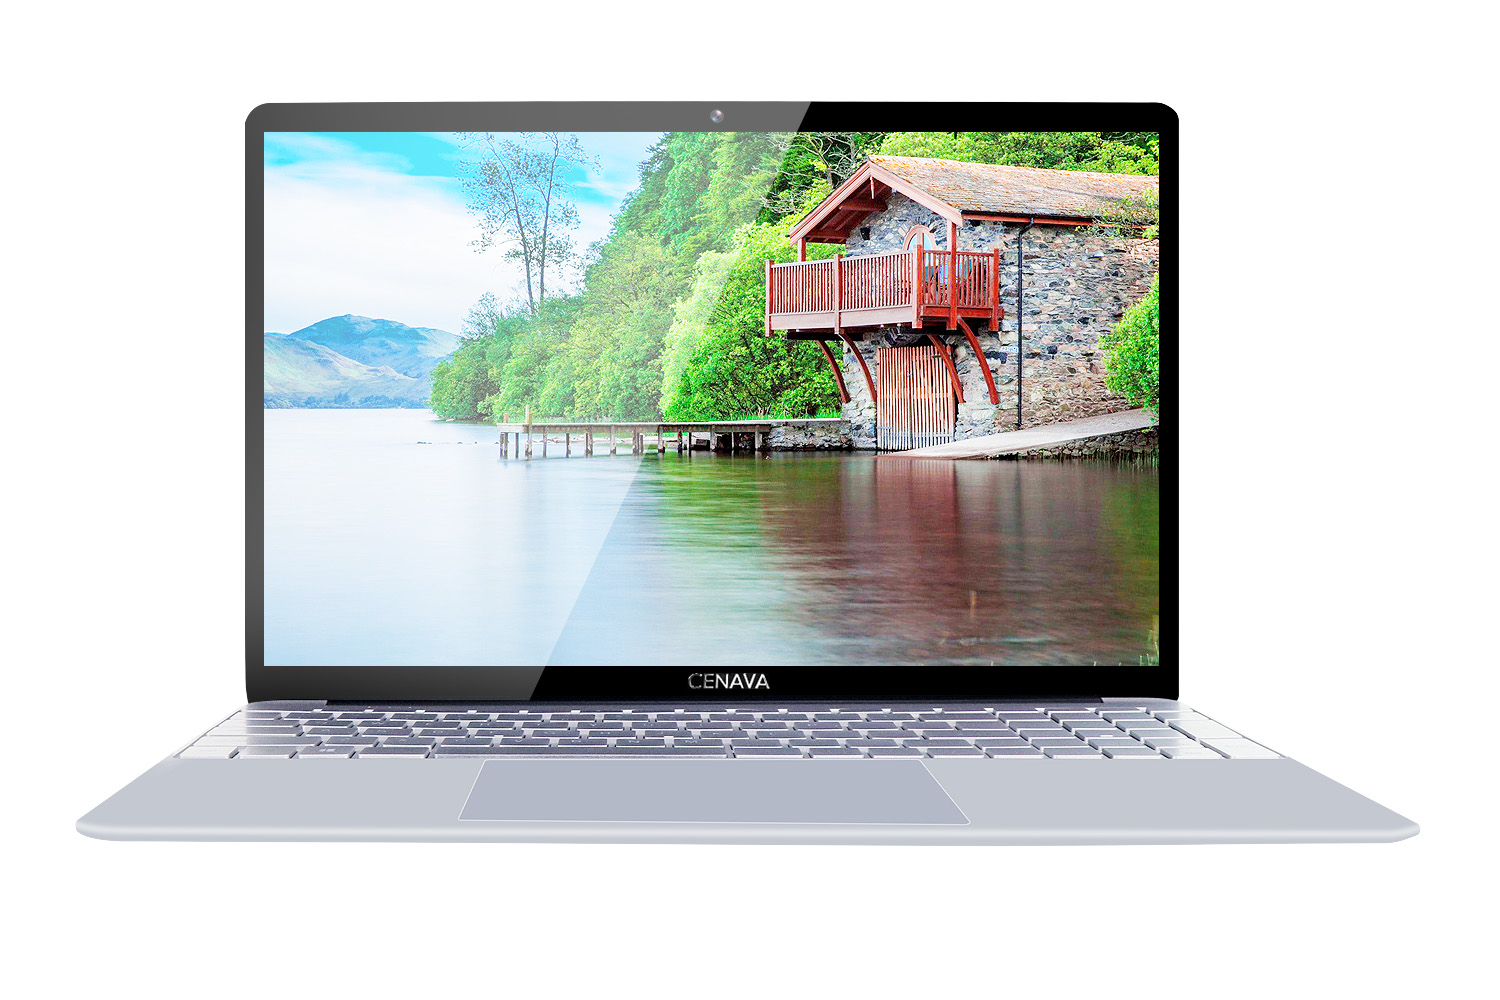 

CENAVA F151 Laptop 15.6 inch Intel Core J3355 Intel HD Graphics 500 Win10 6G RAM 128GB SSD Notebook TN Screen